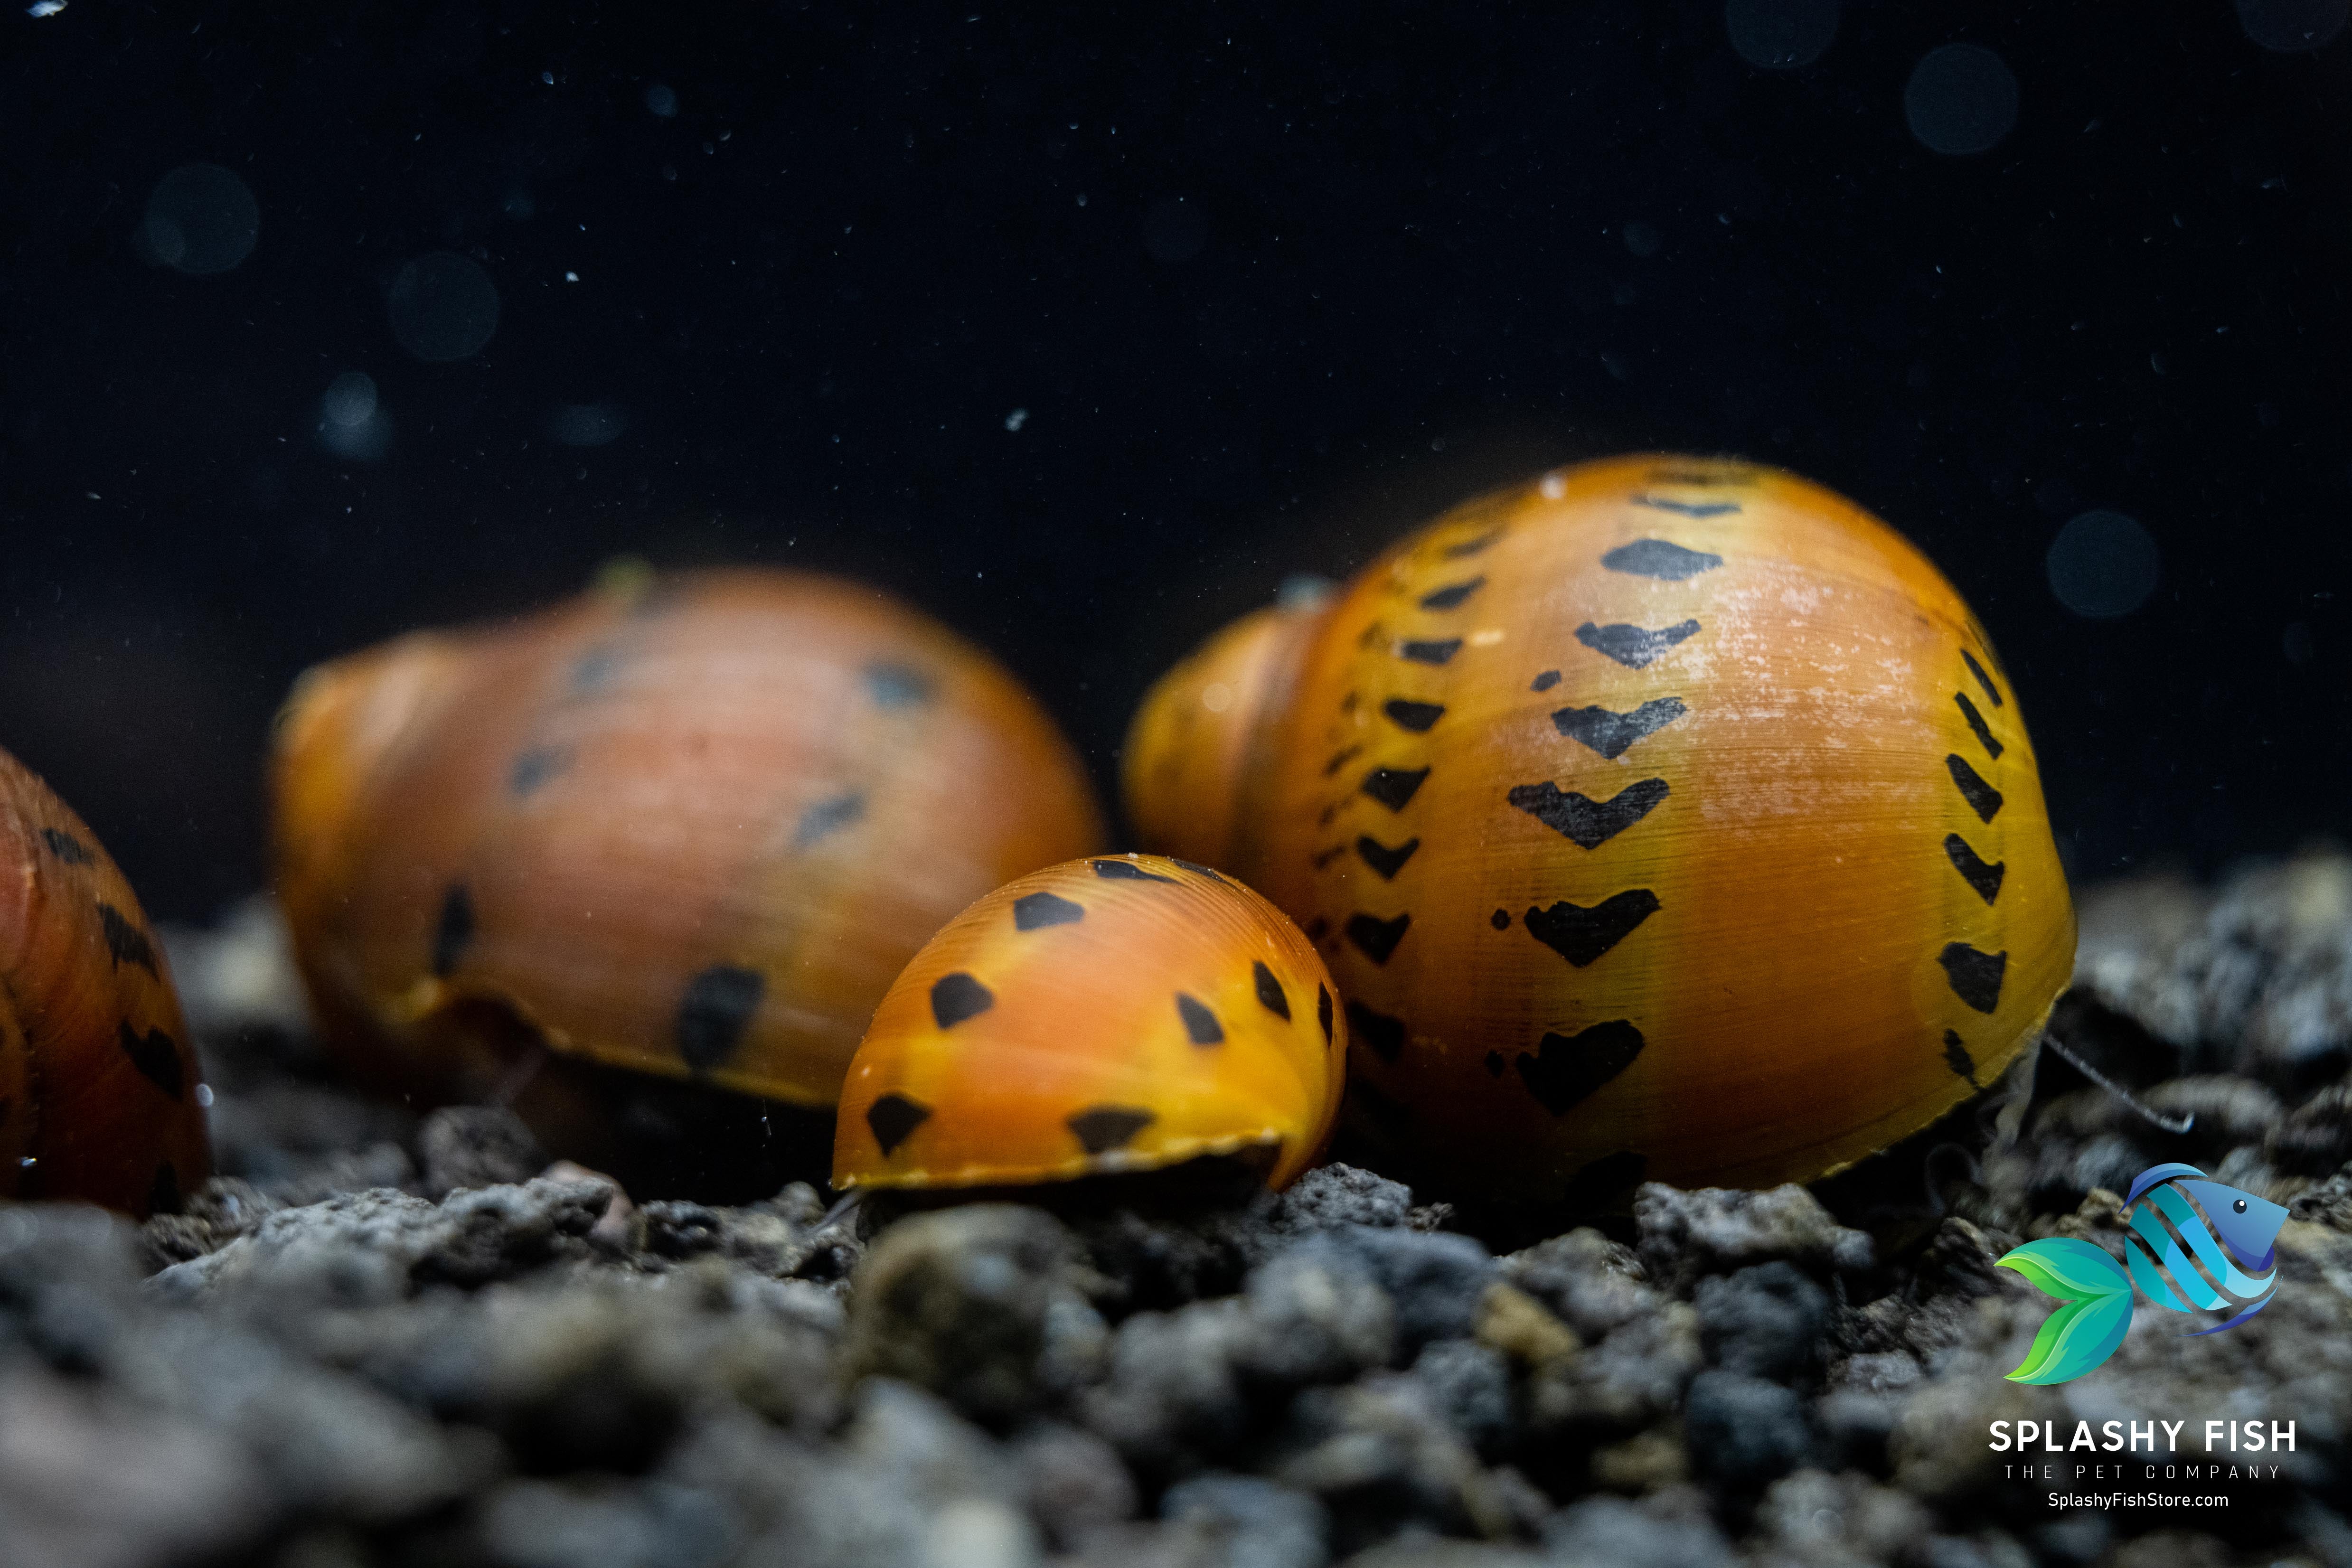 Red Racer Nerite Snail For Sale | Freshwater Aquarium Snail for Tropical Aquarium Fish Tank | Splashy Fish Online Fish Store 